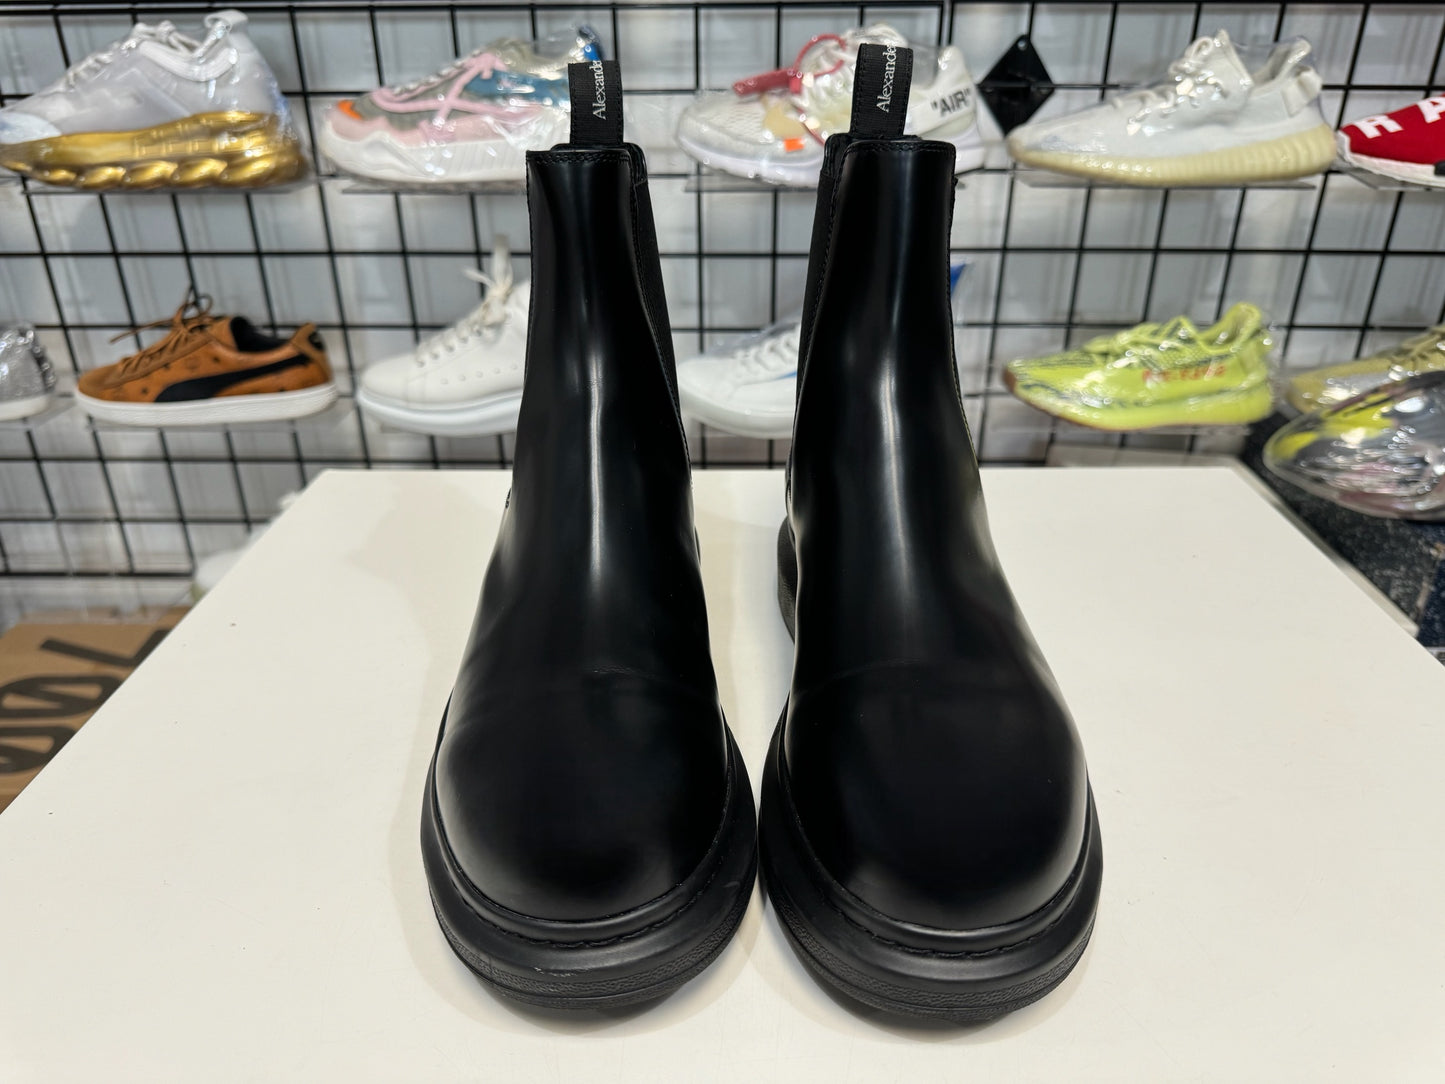 Alexander McQueen Boots size 40